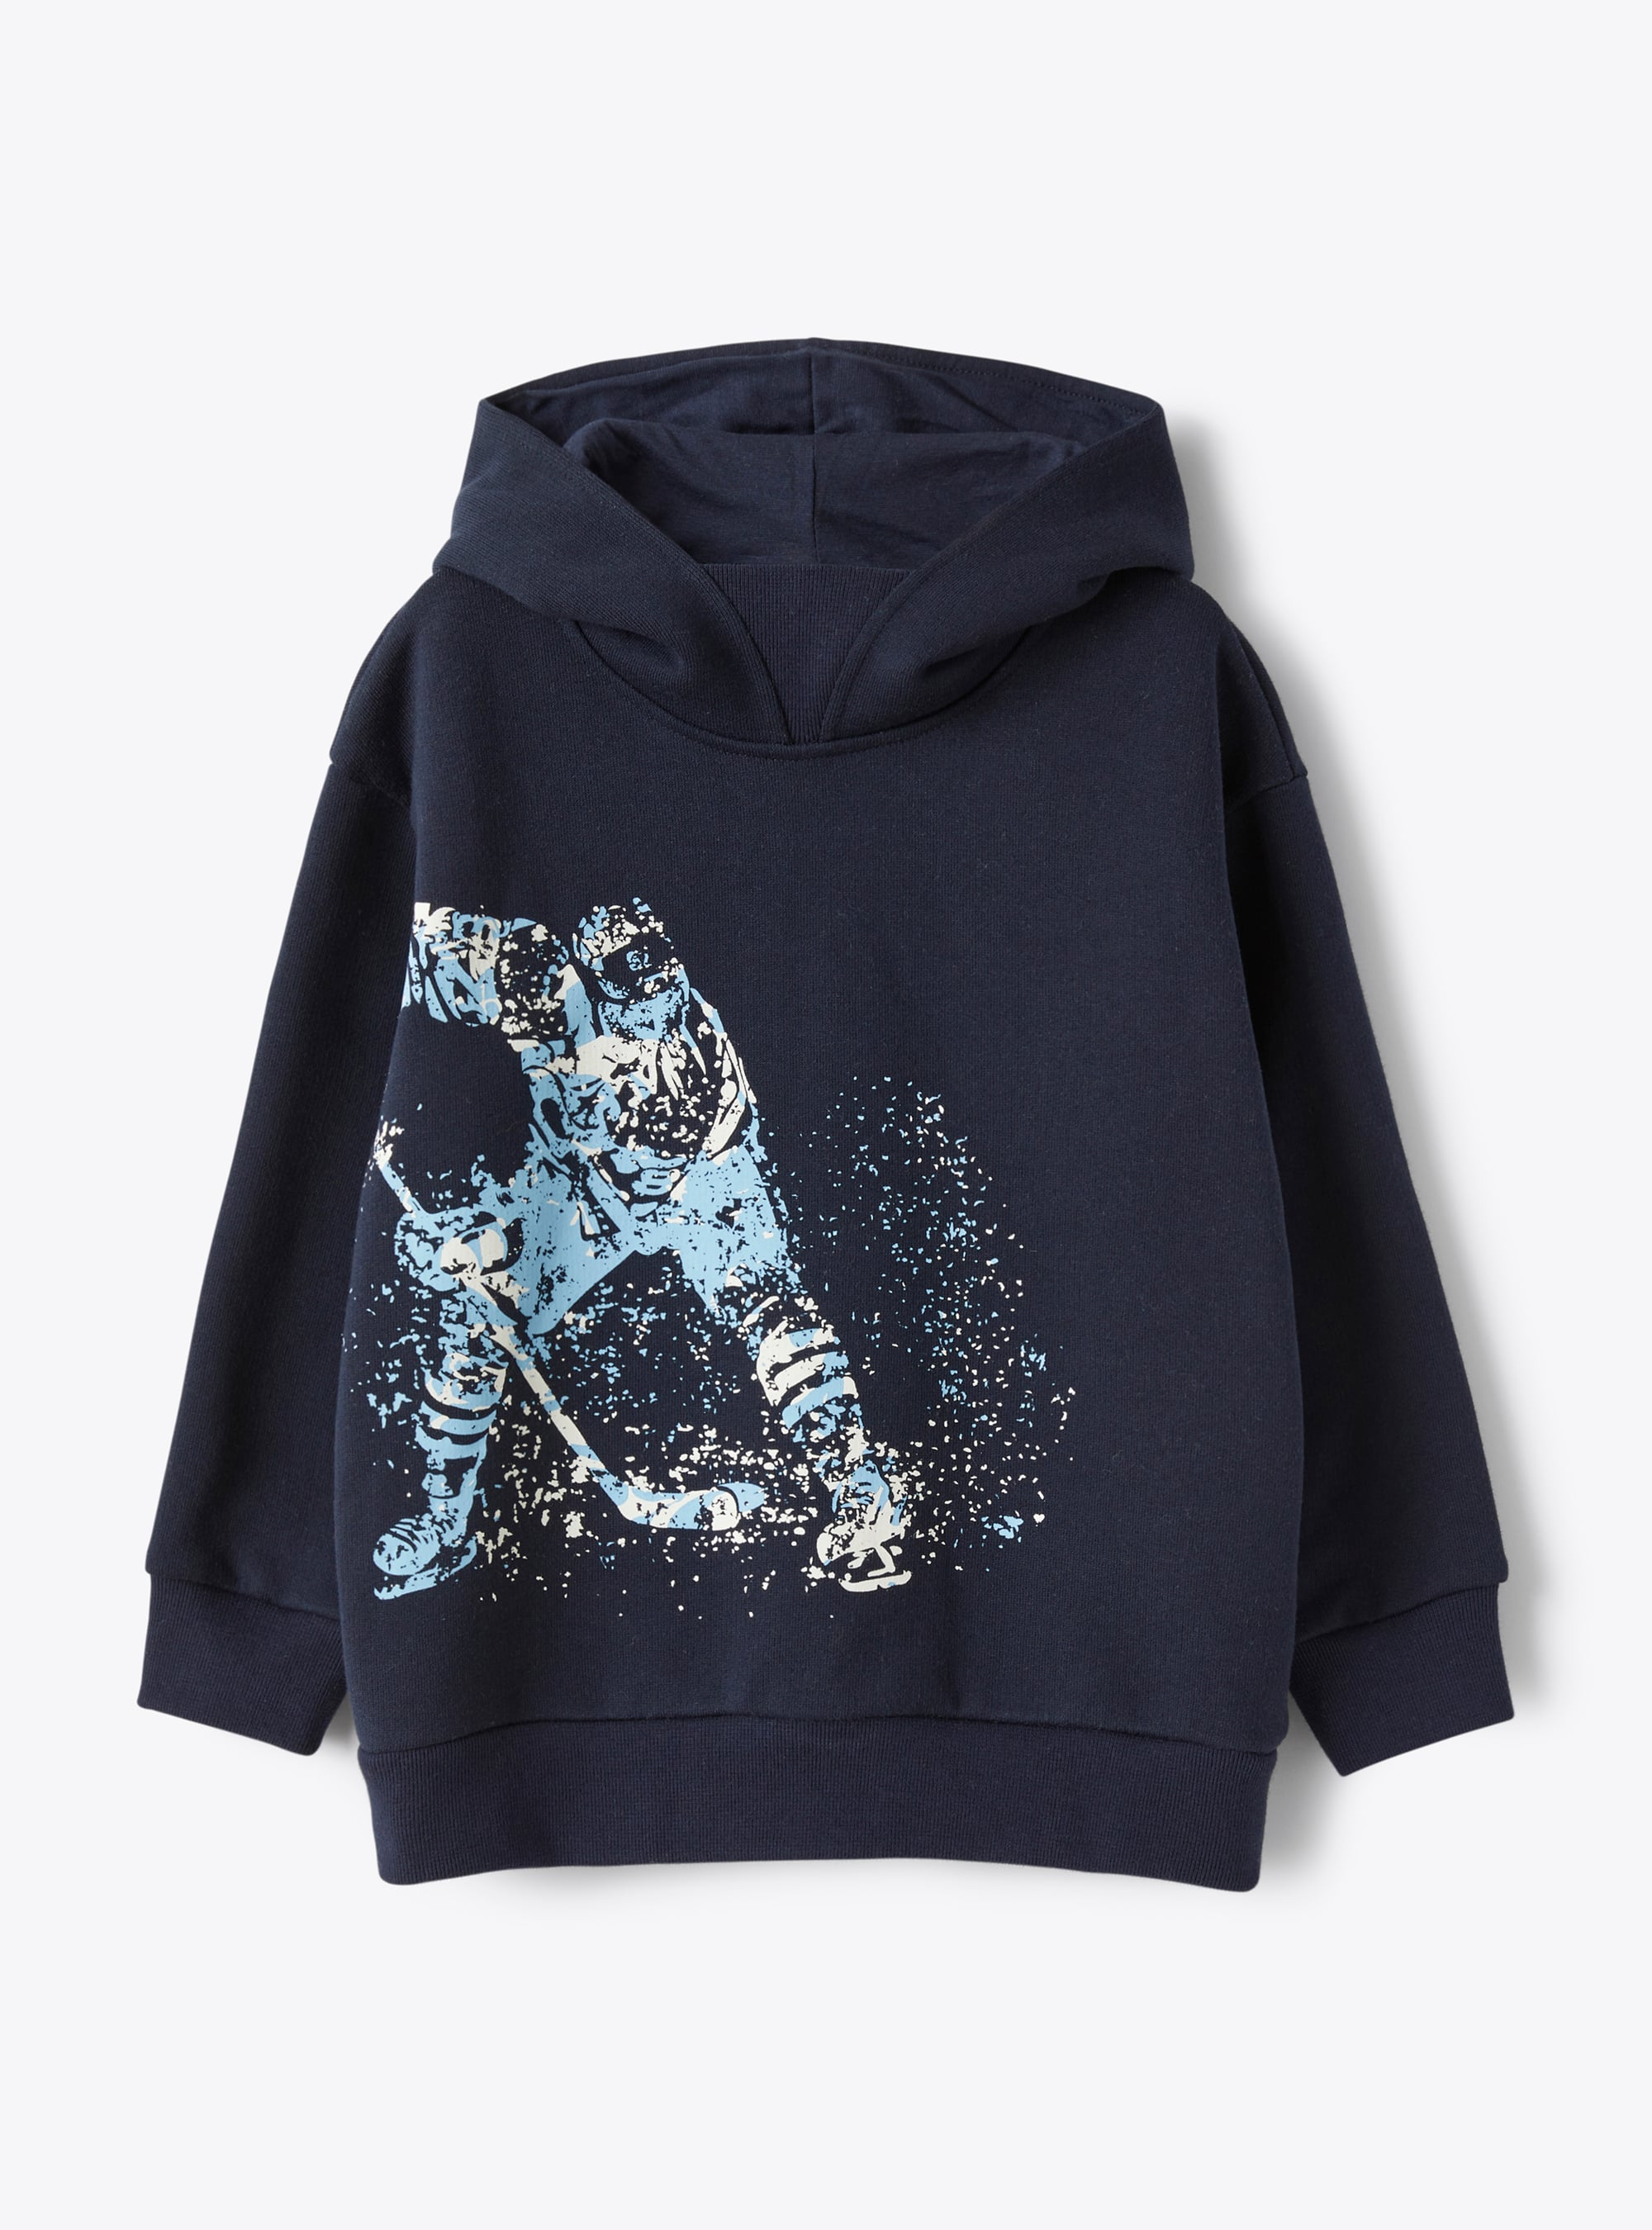 Hooded sweatshirt with a hockey player print design - Sweatshirts - Il Gufo